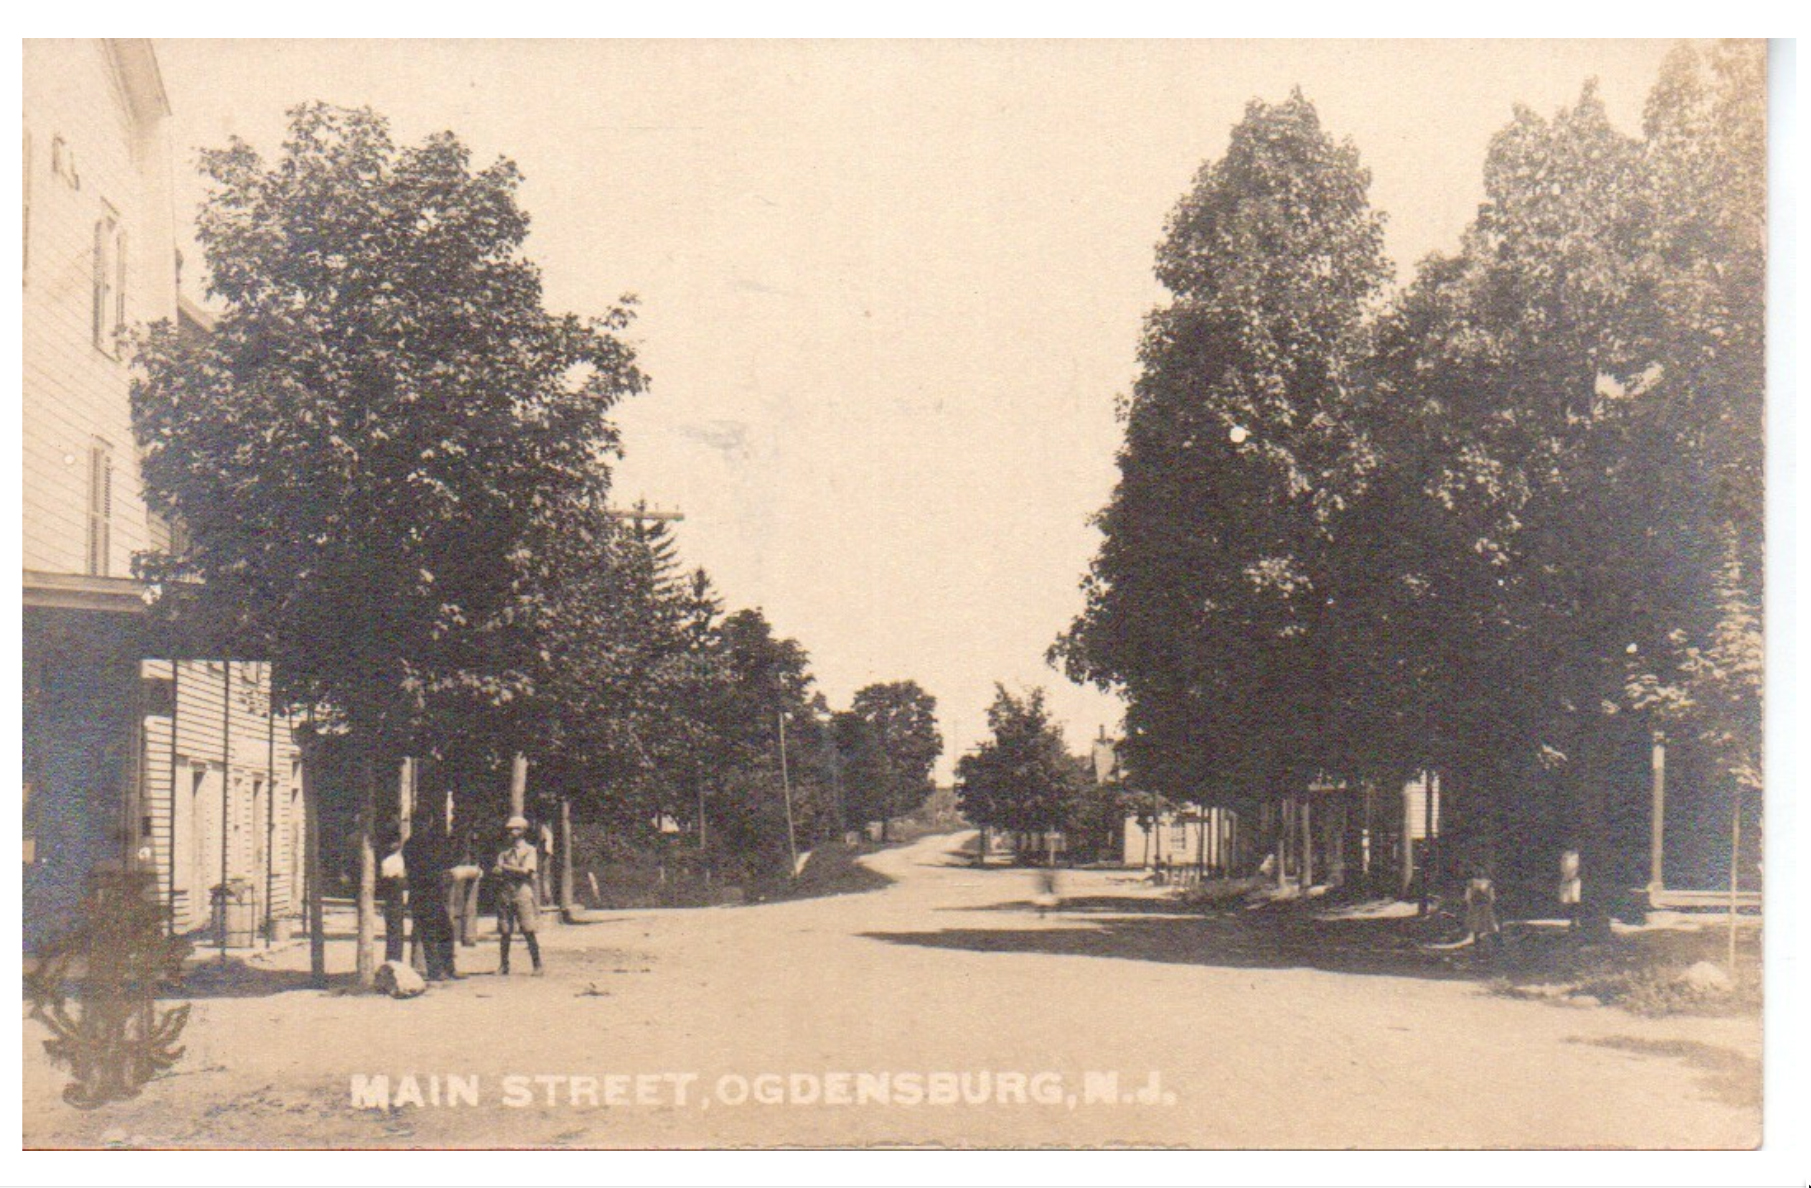 Ogdensburg - Main Street - Ayers and Smith - 1905 - b